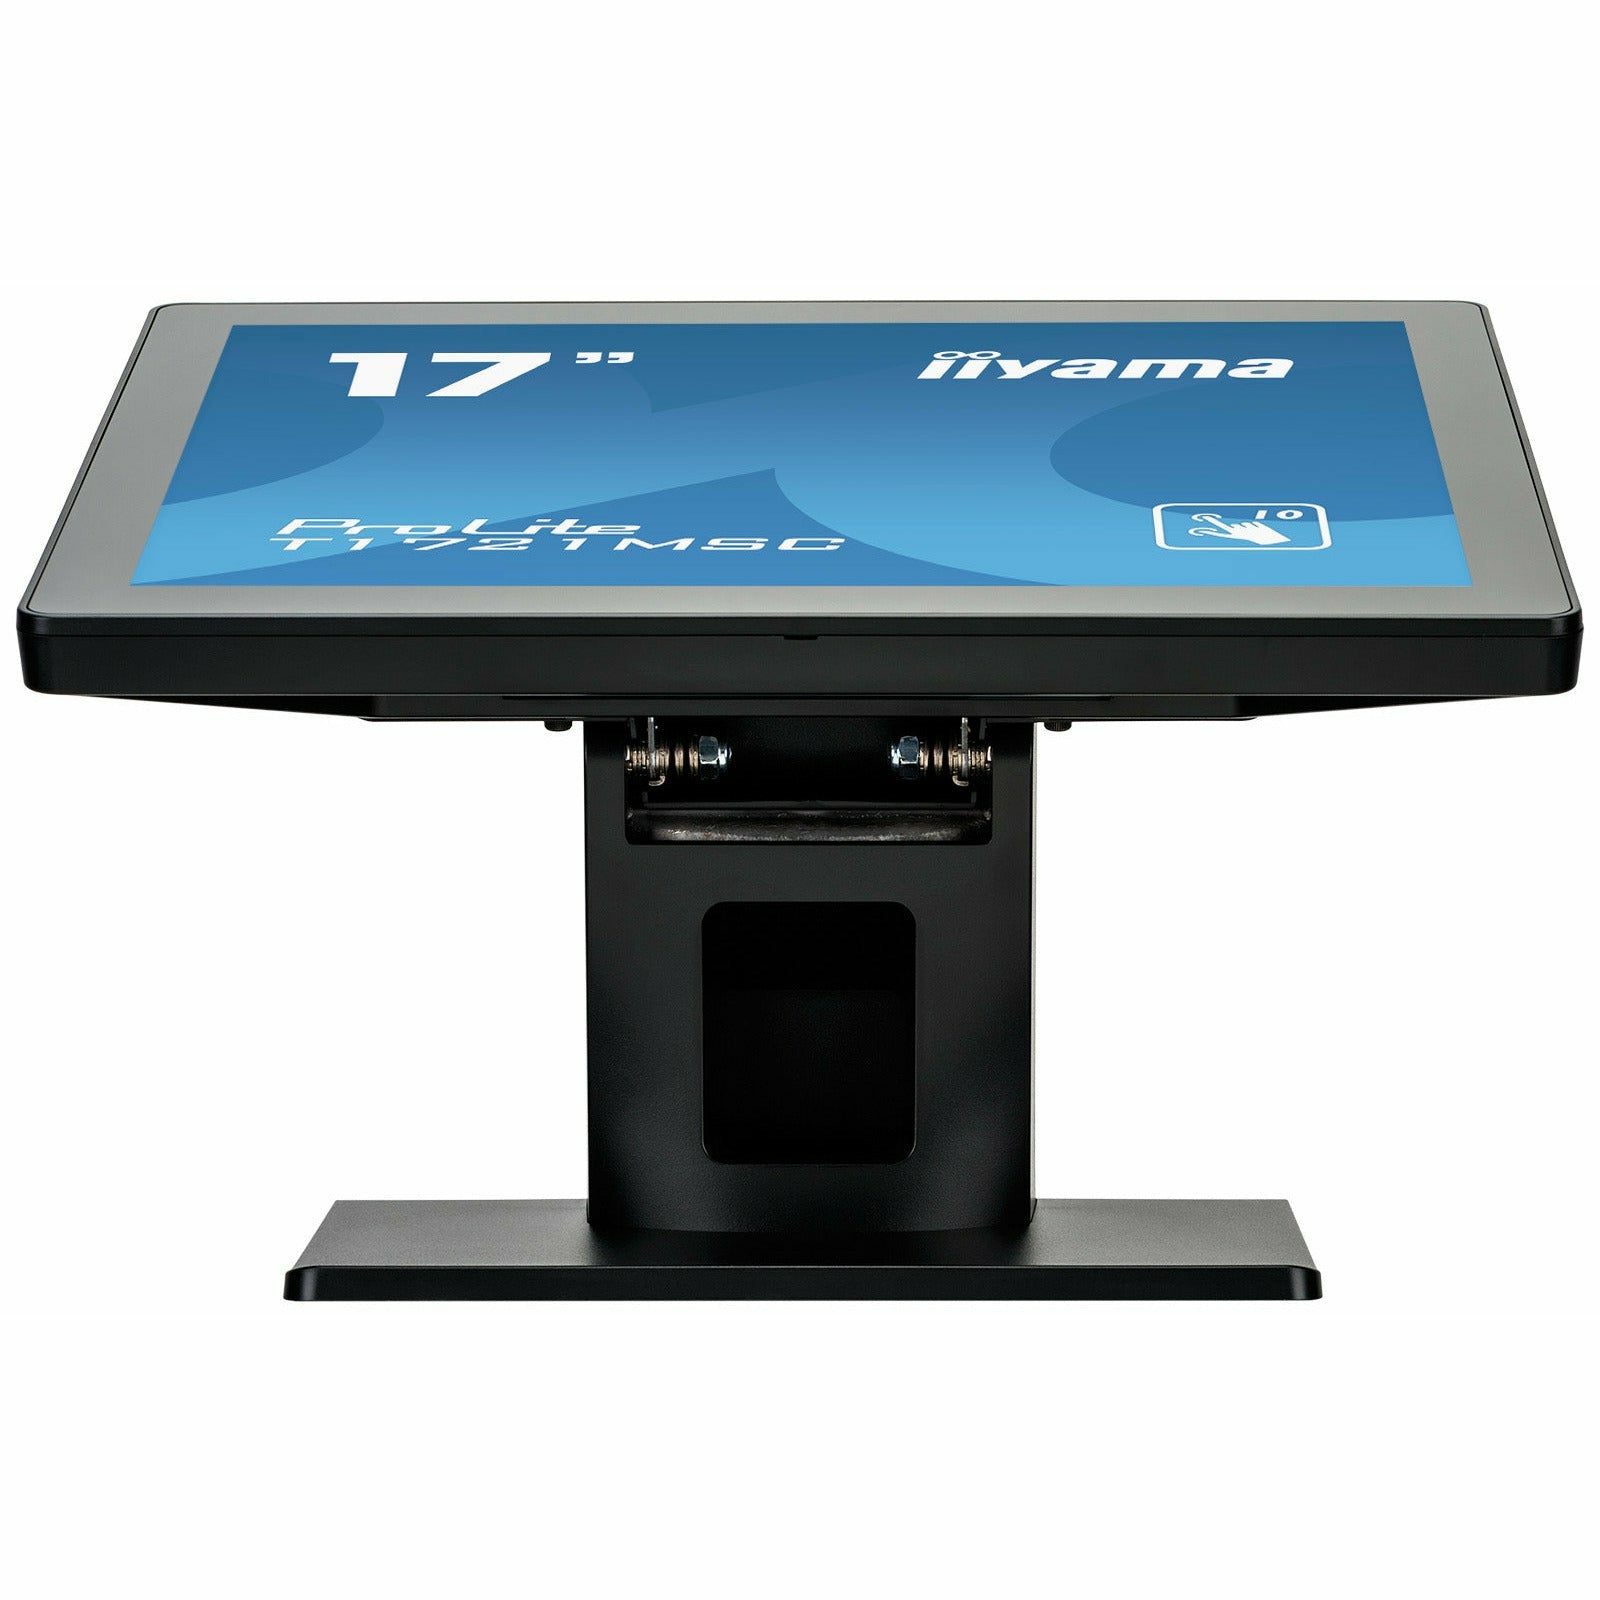 iiyama ProLite T1721MSC-B1 17" Professional Capacitive Touch Screen Display